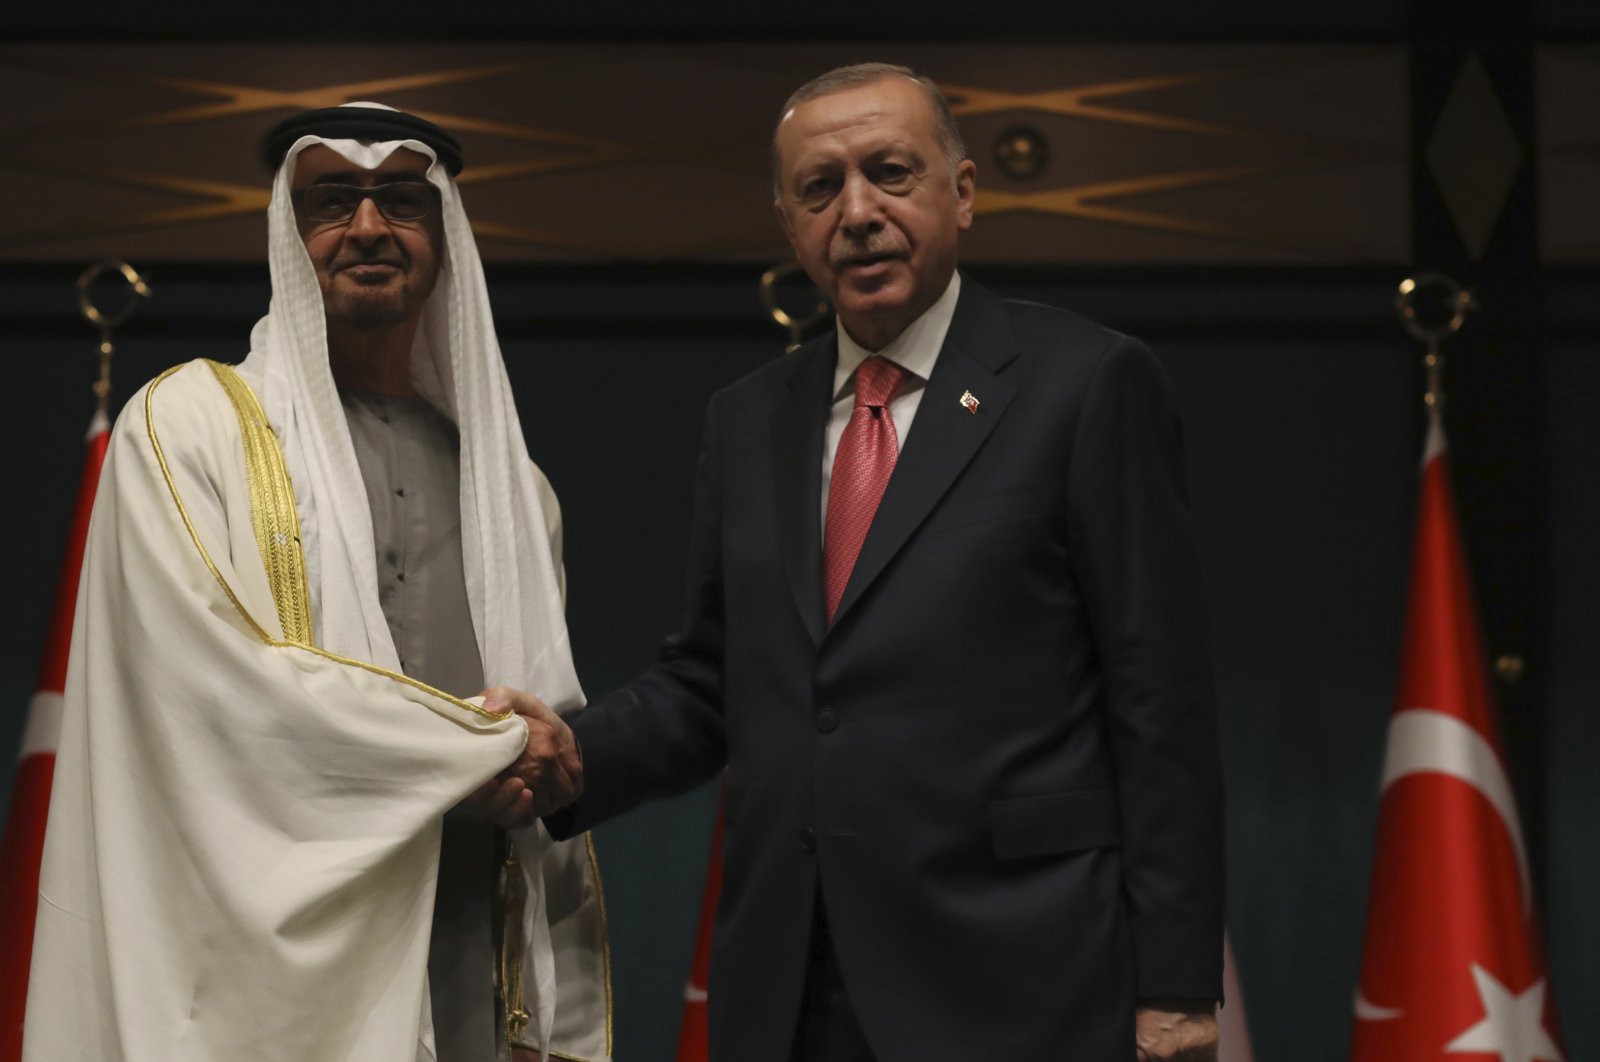 President Erdoğan shakes hands with Sheikh Mohammed bin Zayed Al Nahyan, the Crown Prince of the United Arab Emirates, in the capital Ankara, Türkiye, Nov. 24, 2021. (AP Photo)